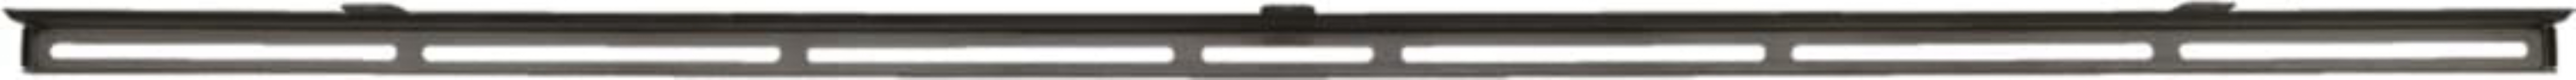 Frigidaire Front Control Range Black Stainless Steel Rear Filler Trim